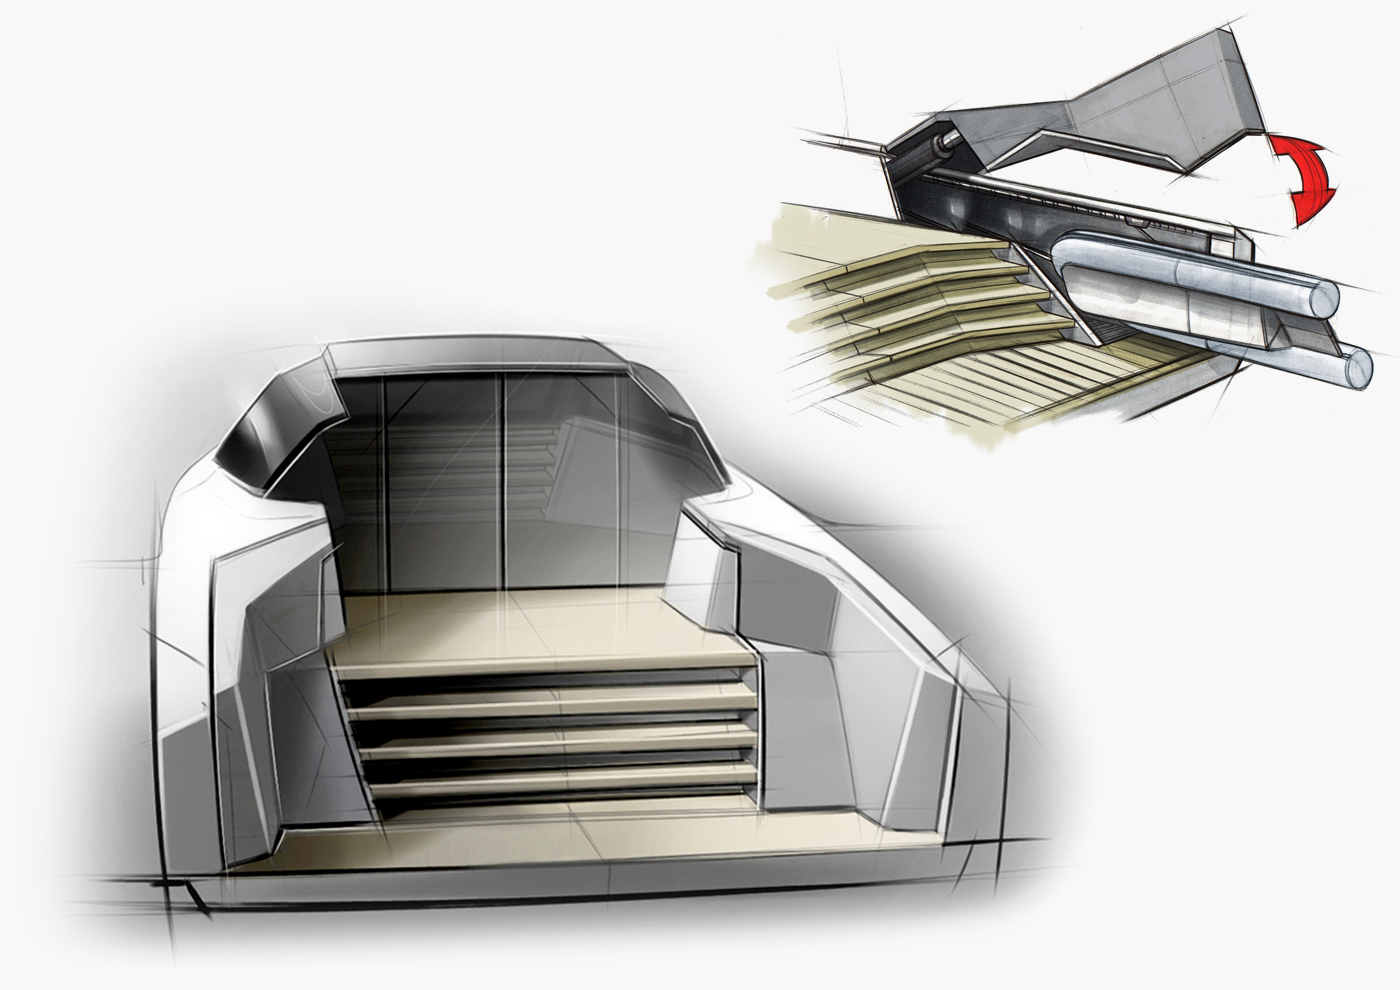 Yacht design - 90 Feet - Power boat - Concept sketch2 - Davide Mezzasalma - Furniture design - Berlin